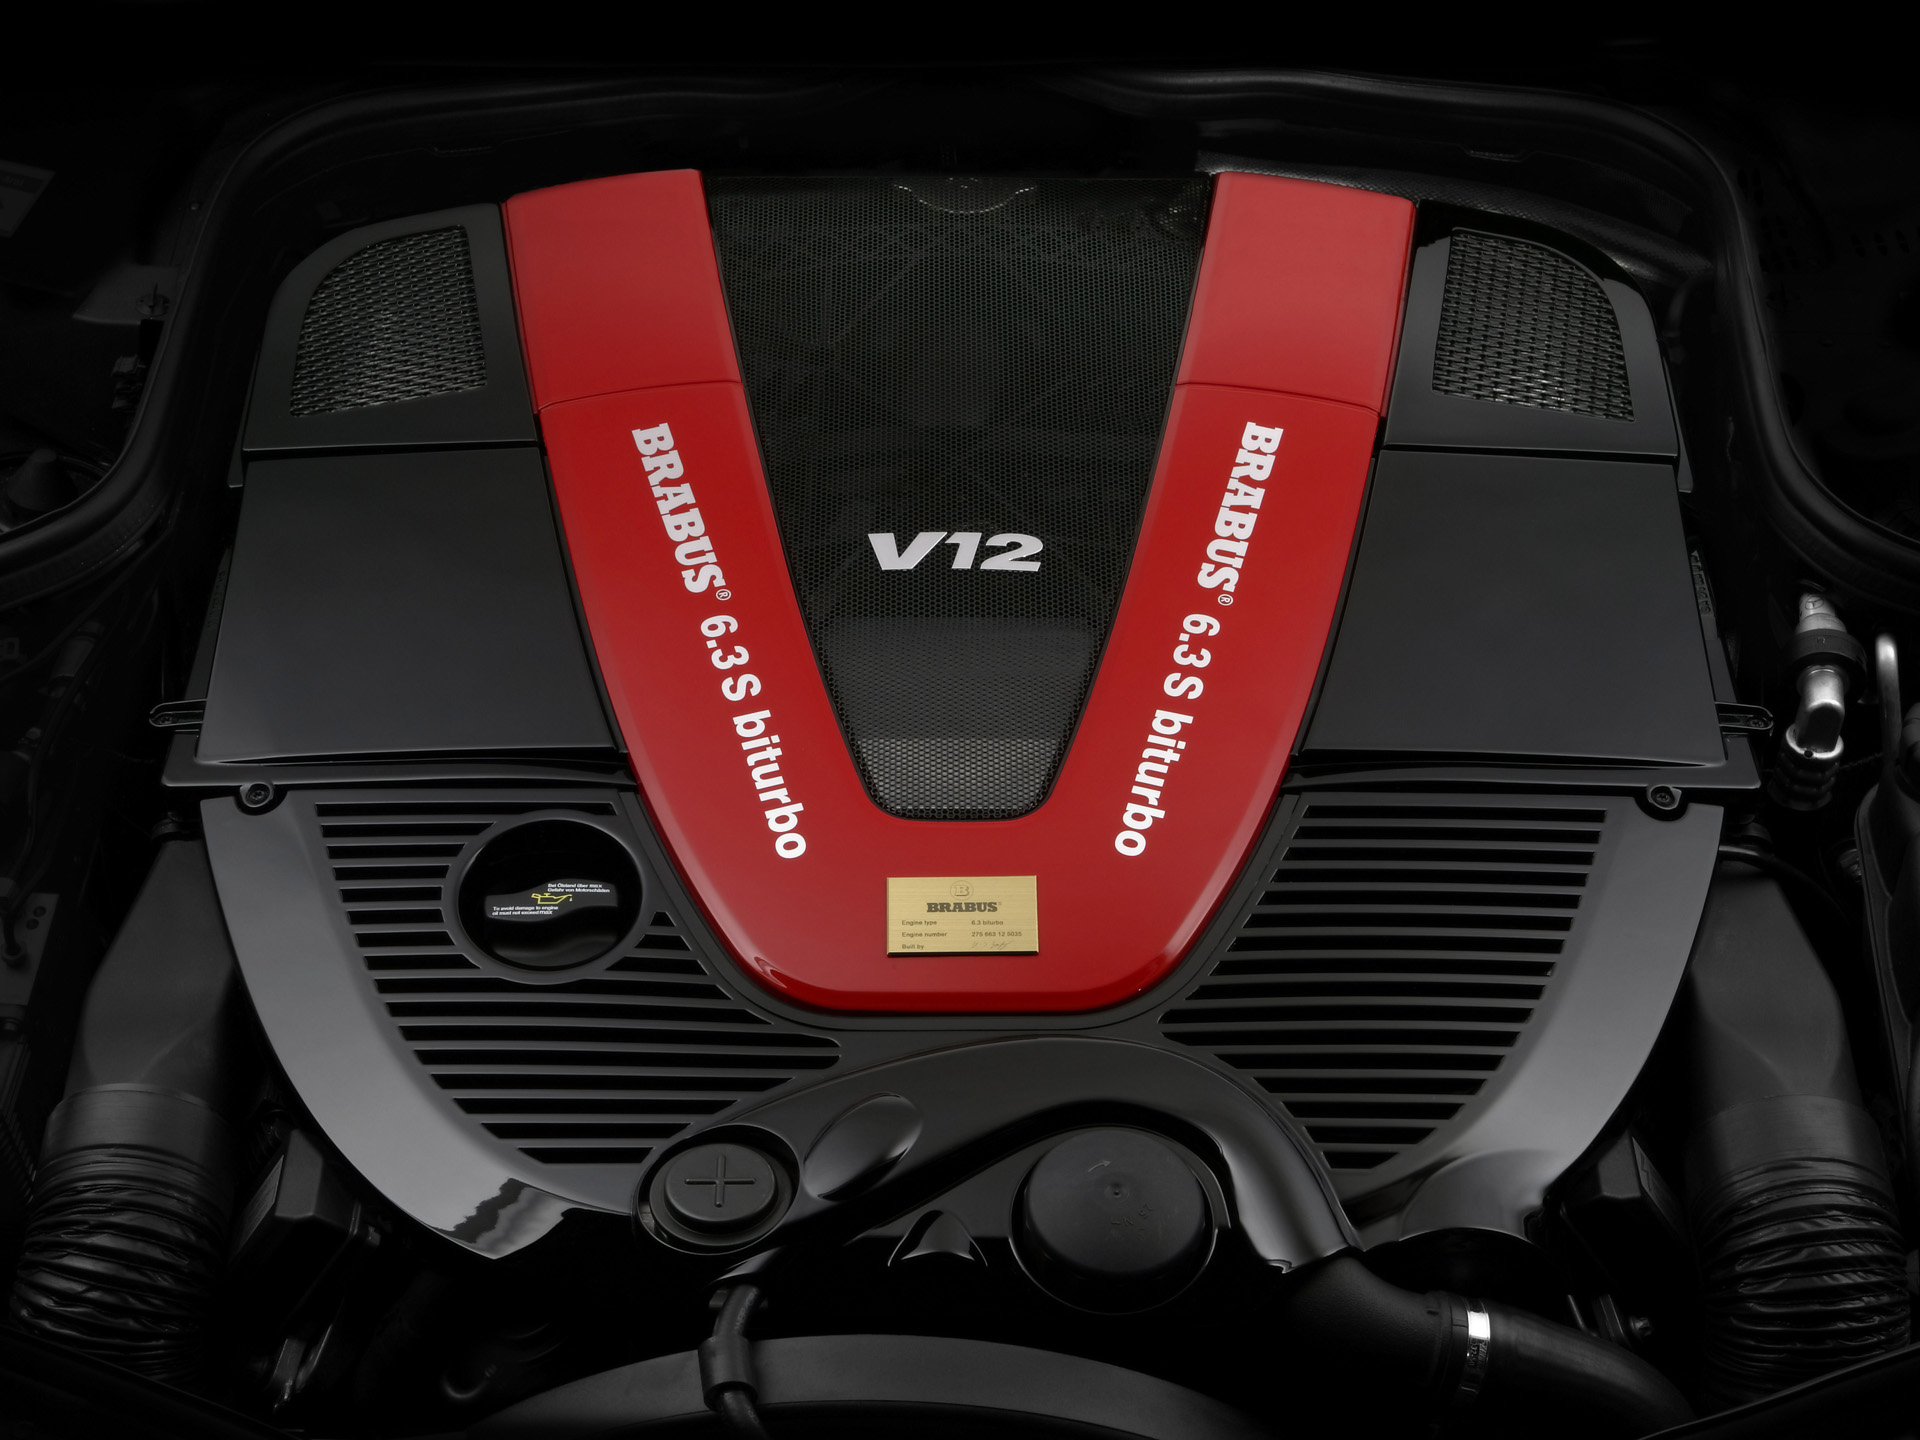 Brabus V12 engine Windows 7 Cars Desktop Wallpapers | Car ...